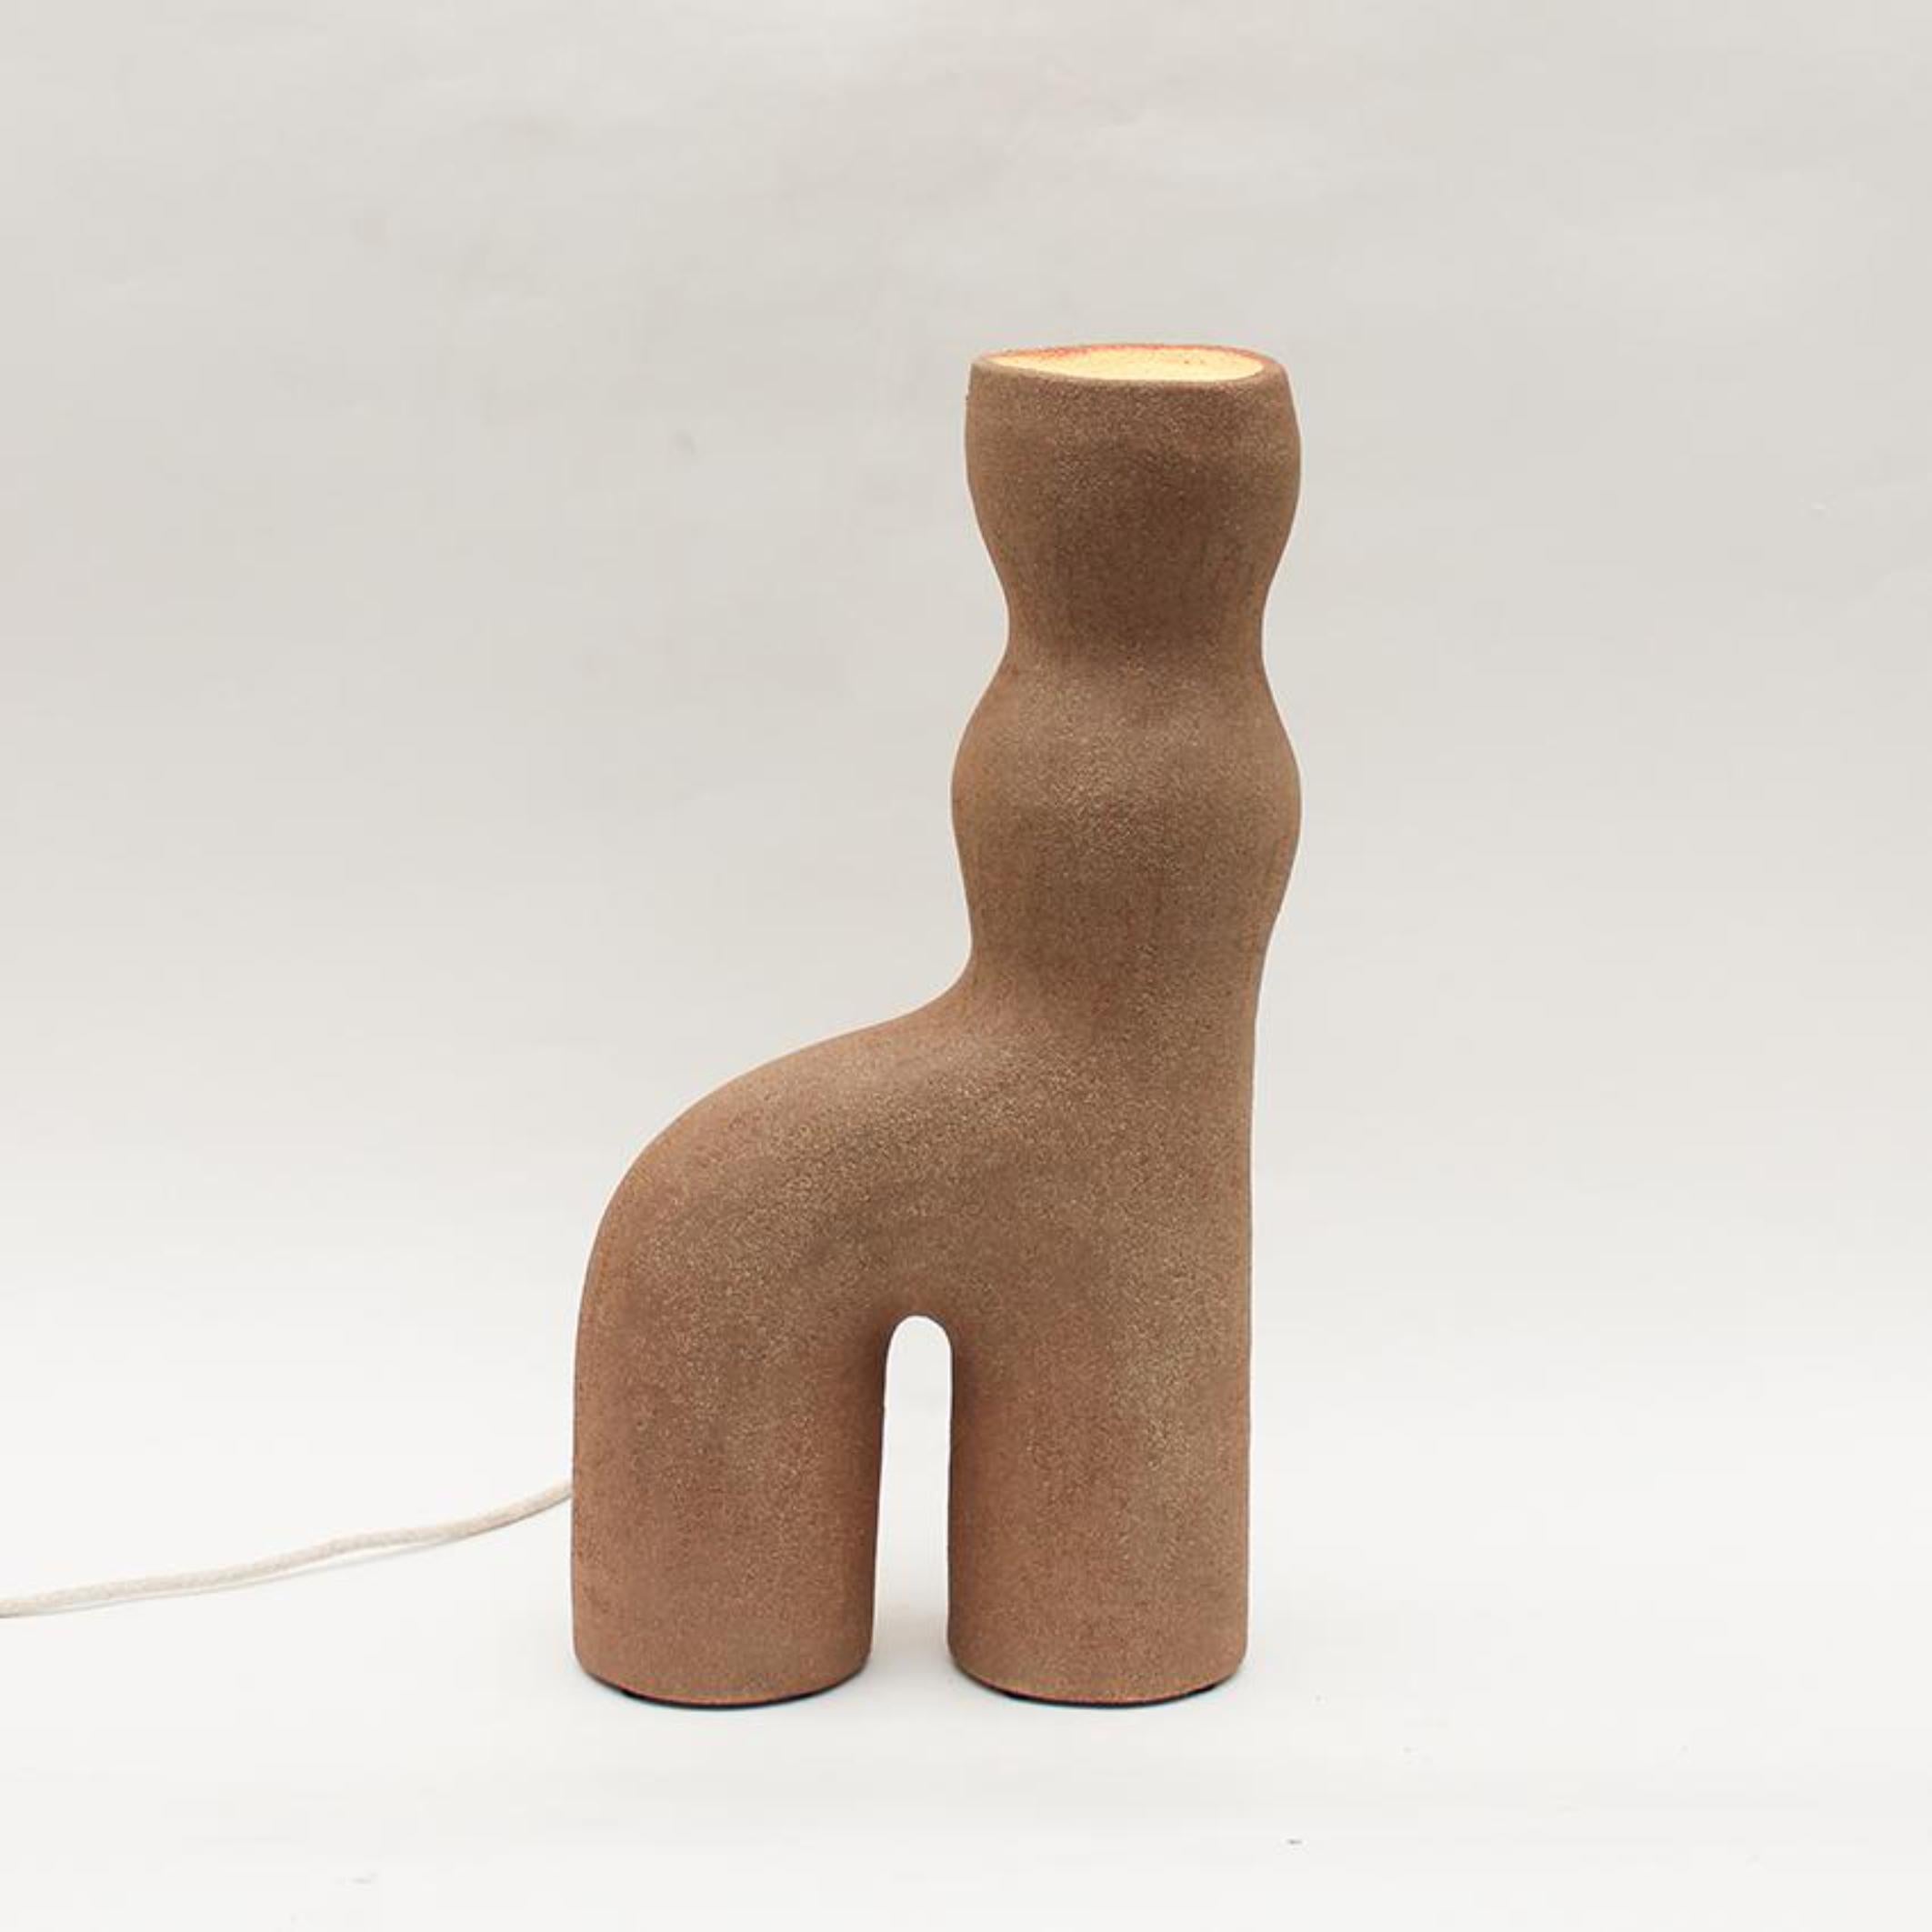 Zenith #1 Gingerbread Stoneware Lamp by Elisa Uberti For Sale 2